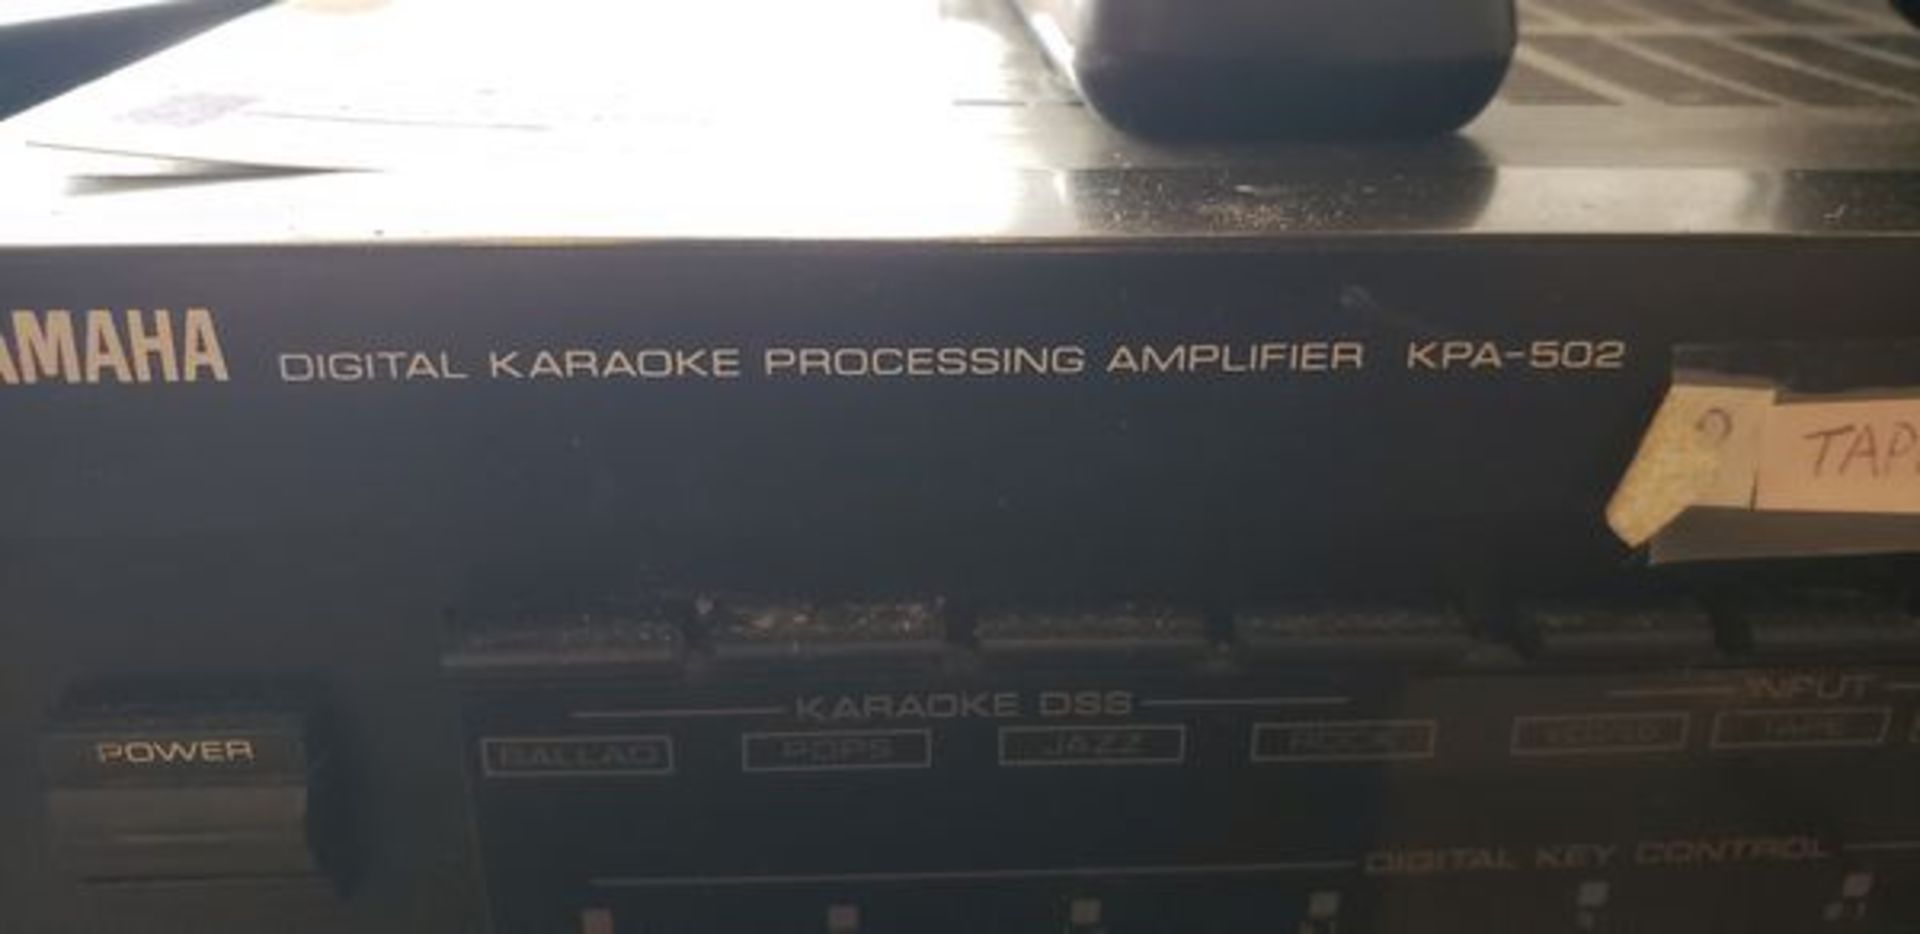 YAMAHA DIGITAL KARAOKE PROCESSING AMPLIFIER MODEL KPA-502 WITH MICROPHONE - Image 3 of 6